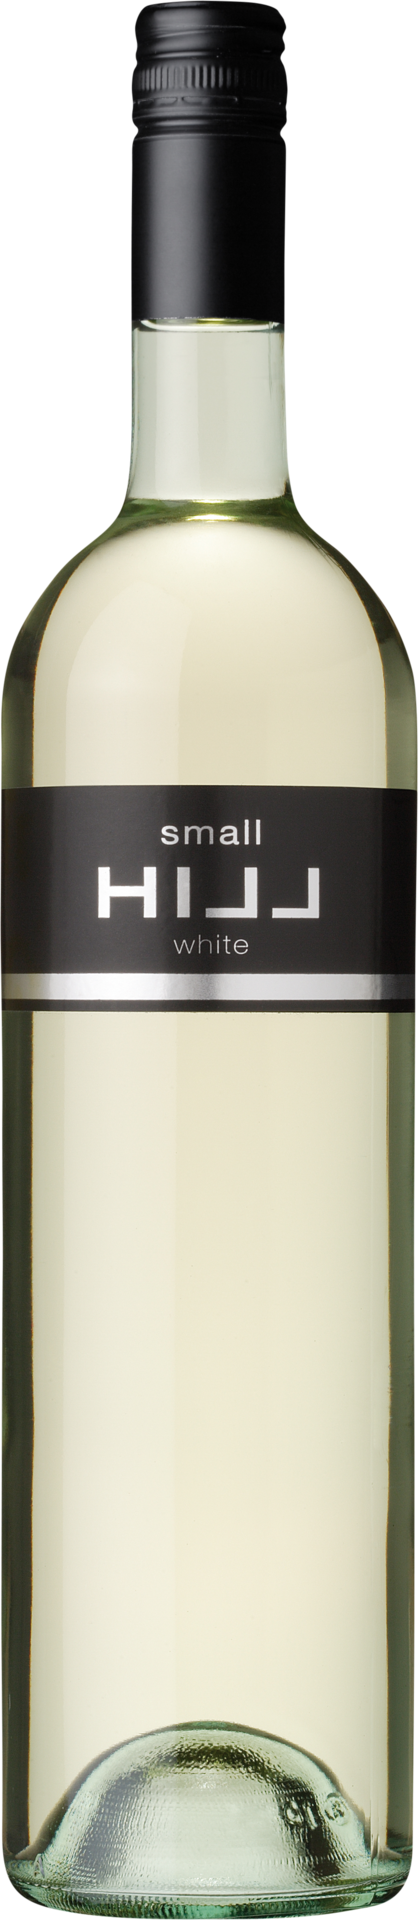 Small Hill White